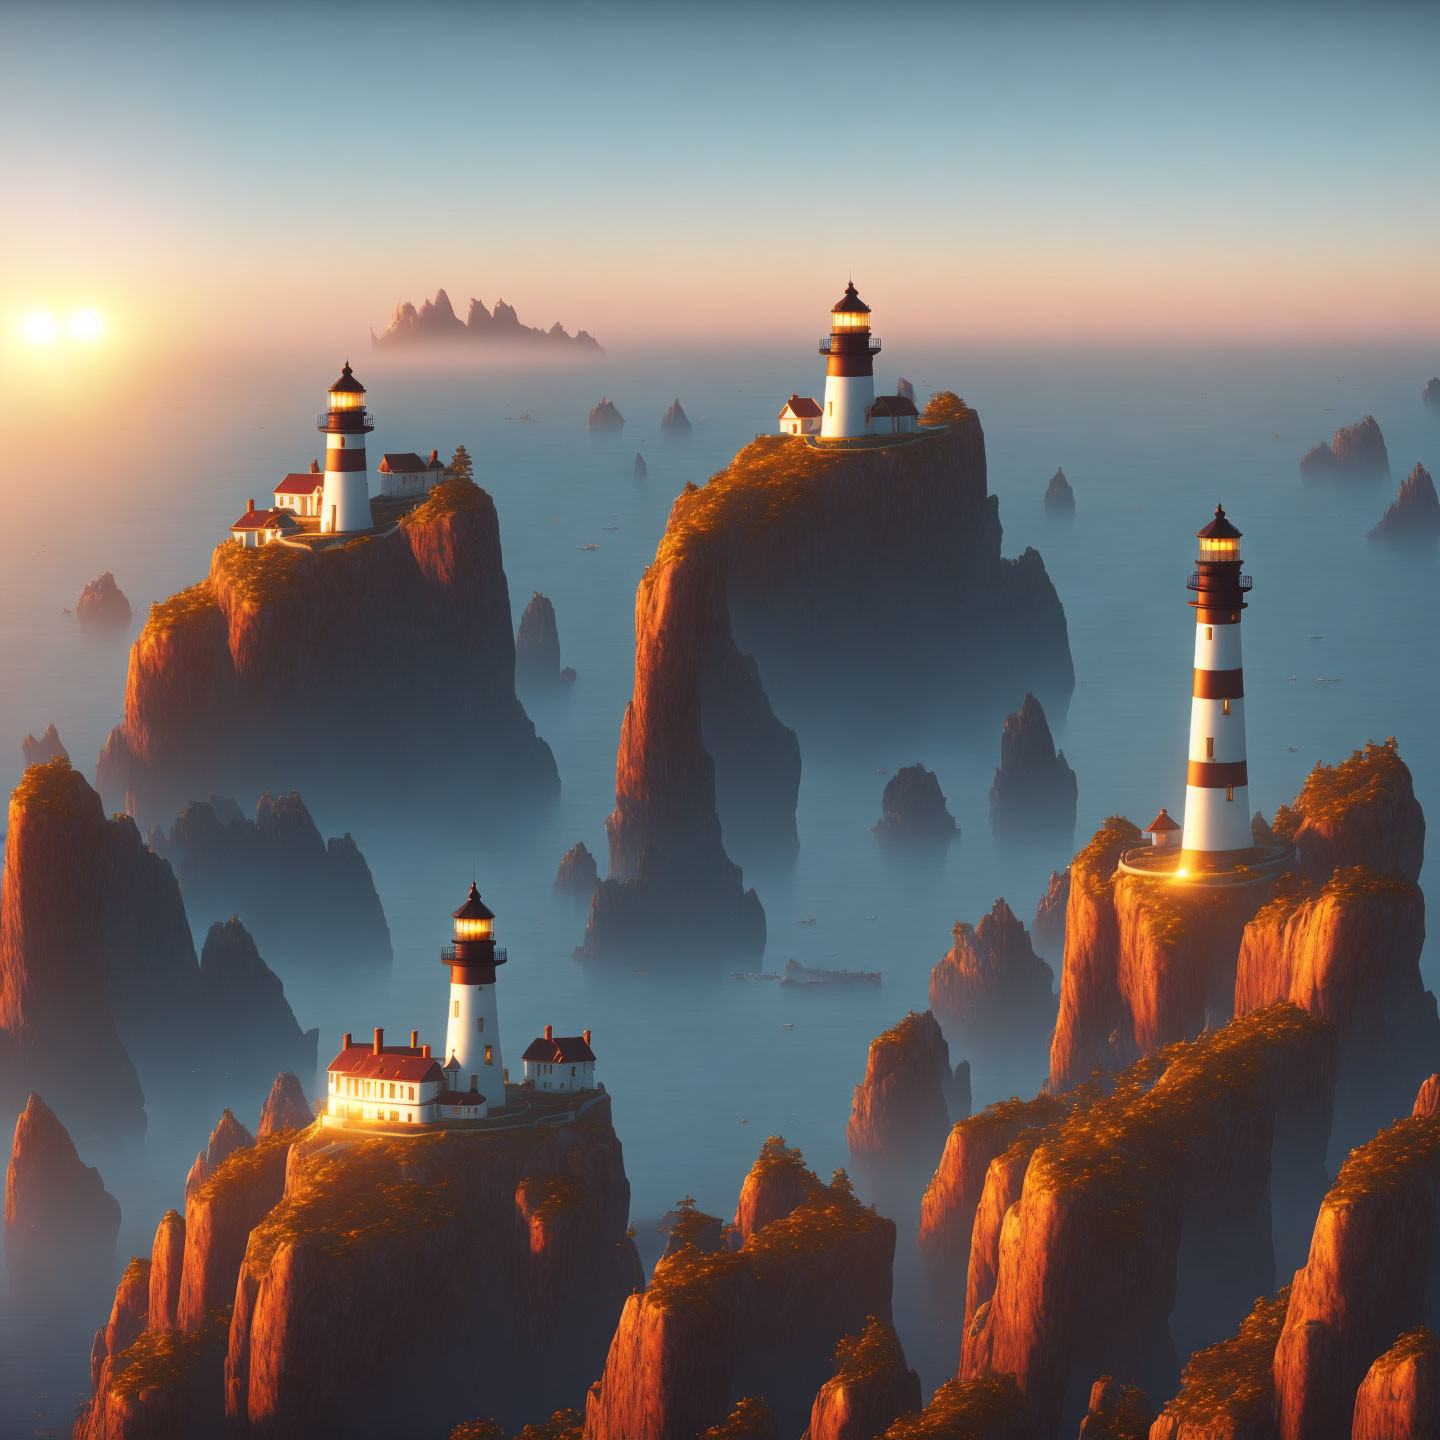 Lighthouses on steep cliffs in misty sunrise seascape